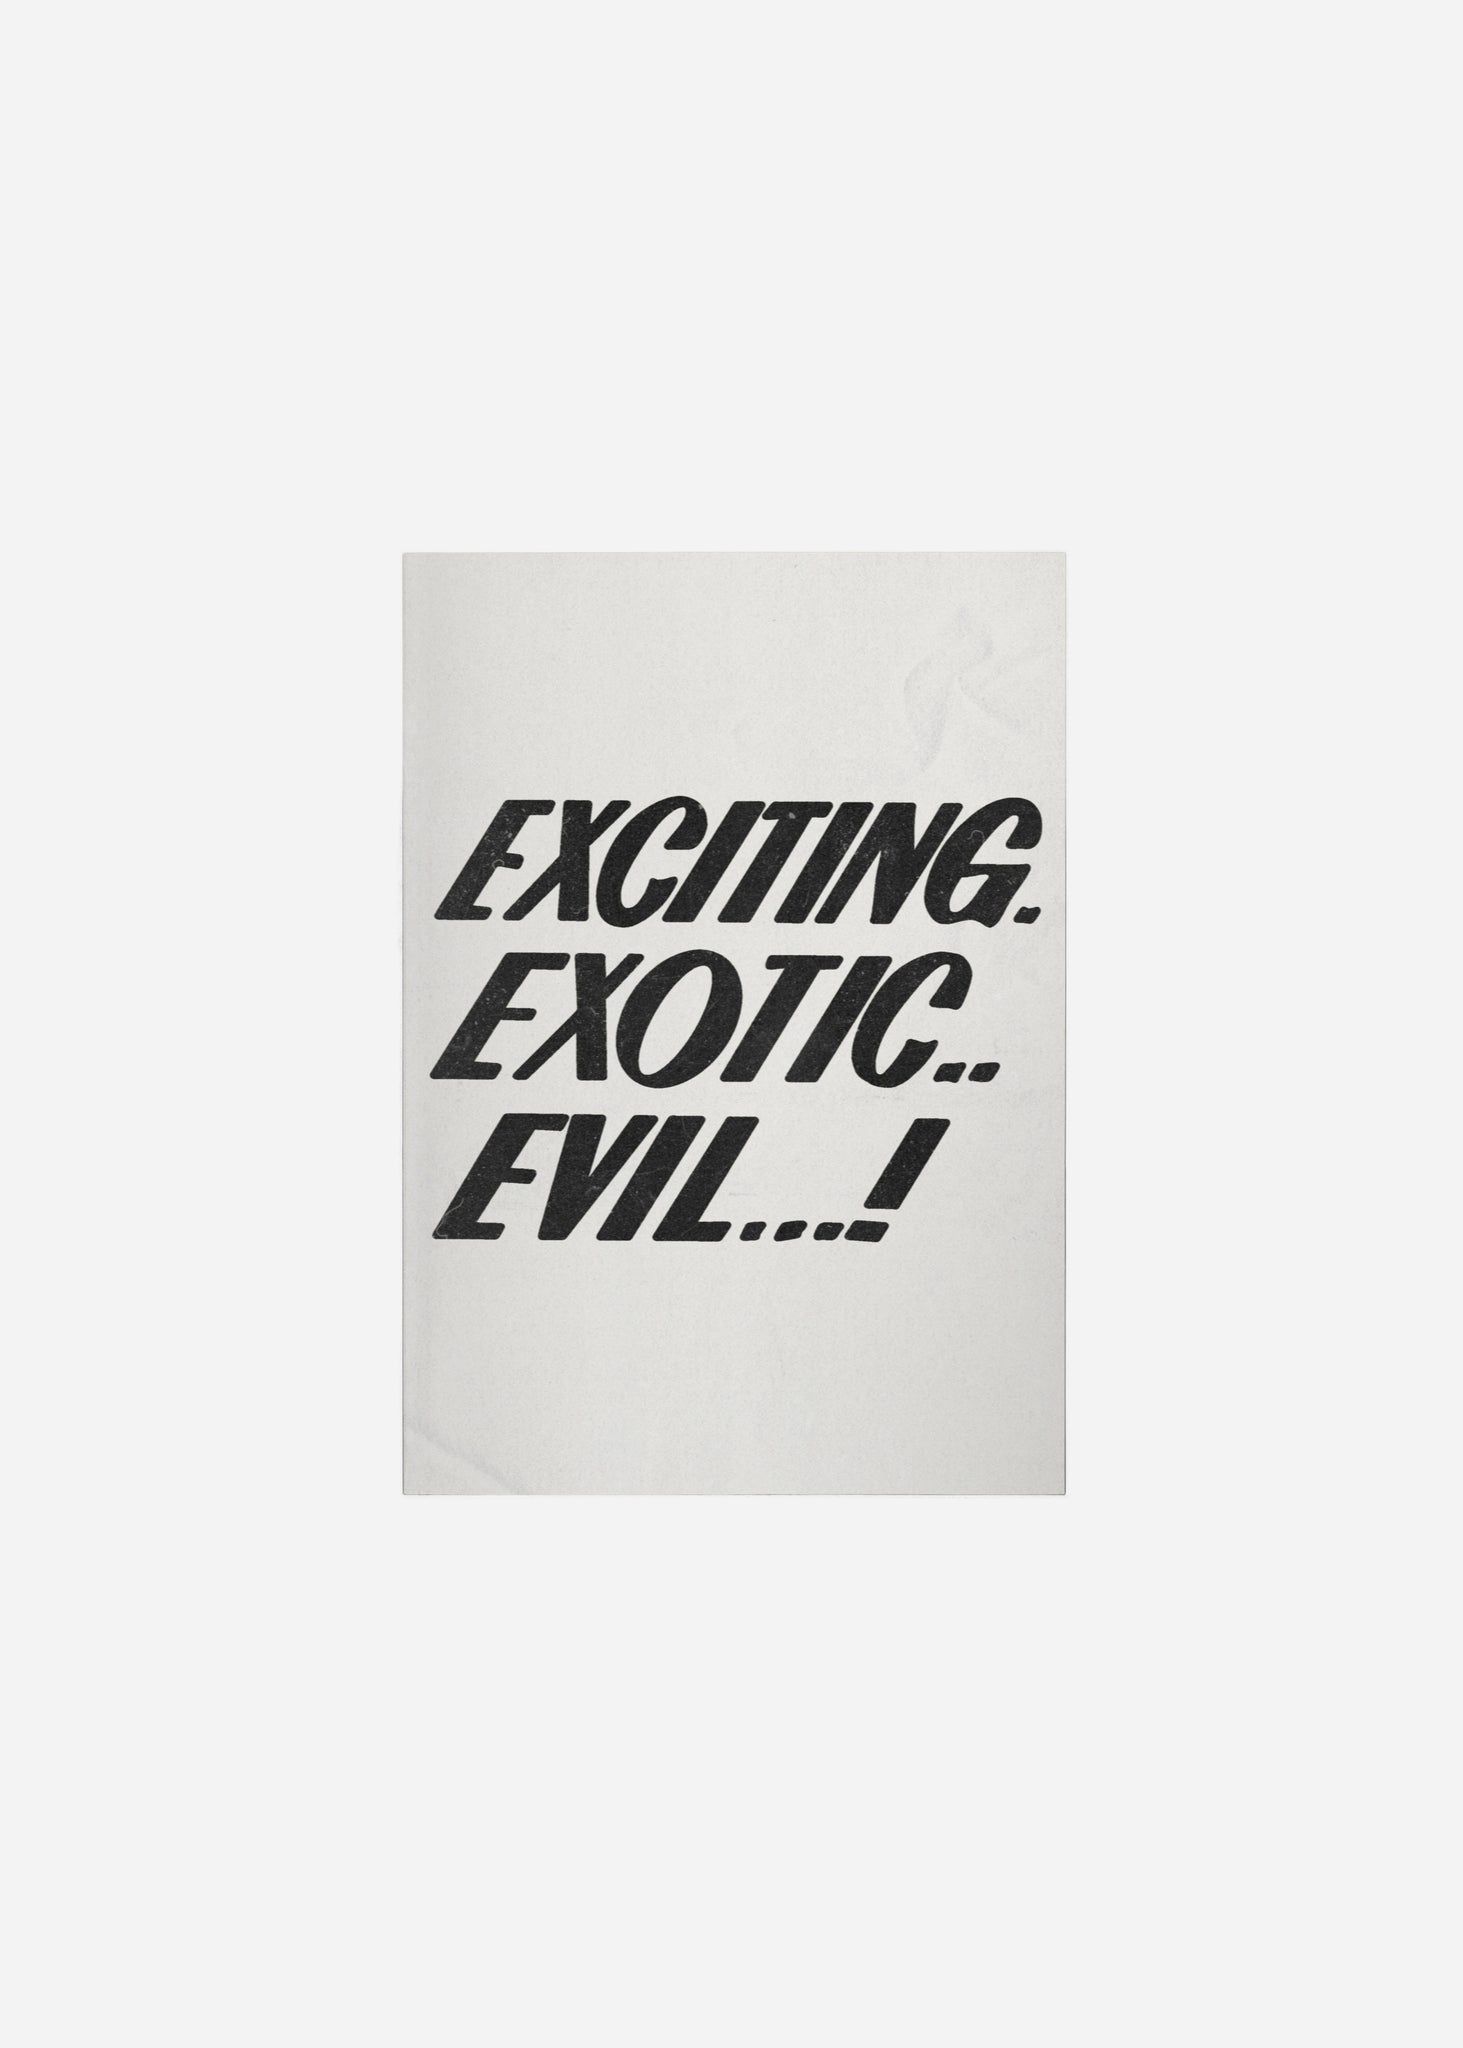 Exciting exotic evil! Fine Art Print